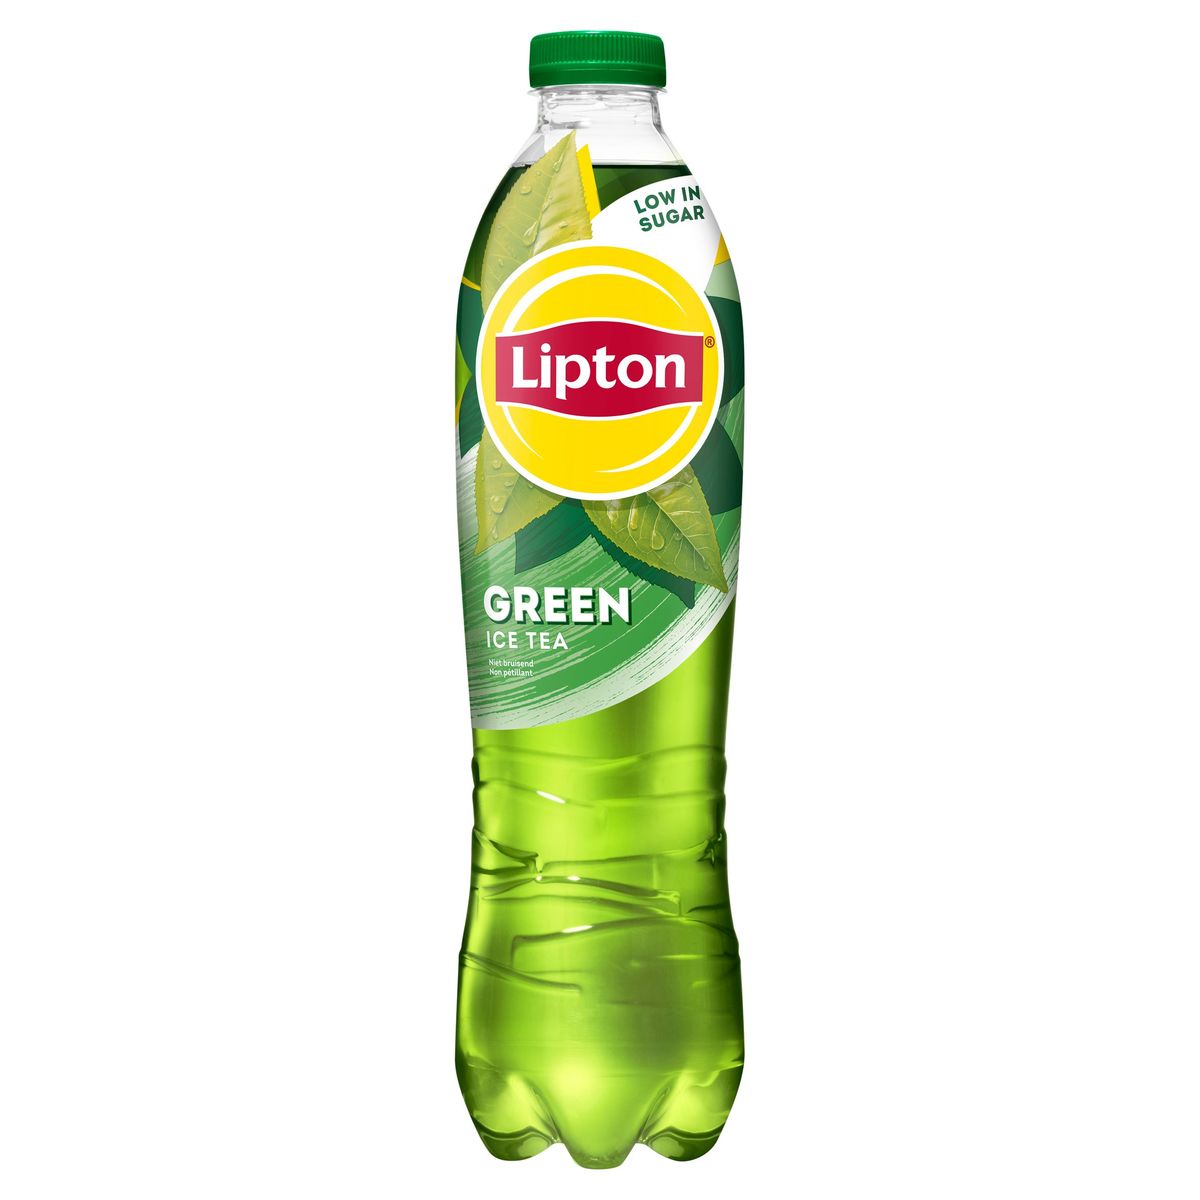 Lipton Ice Tea Thé vert glacé Green Original Faible en sucre 1.5 L